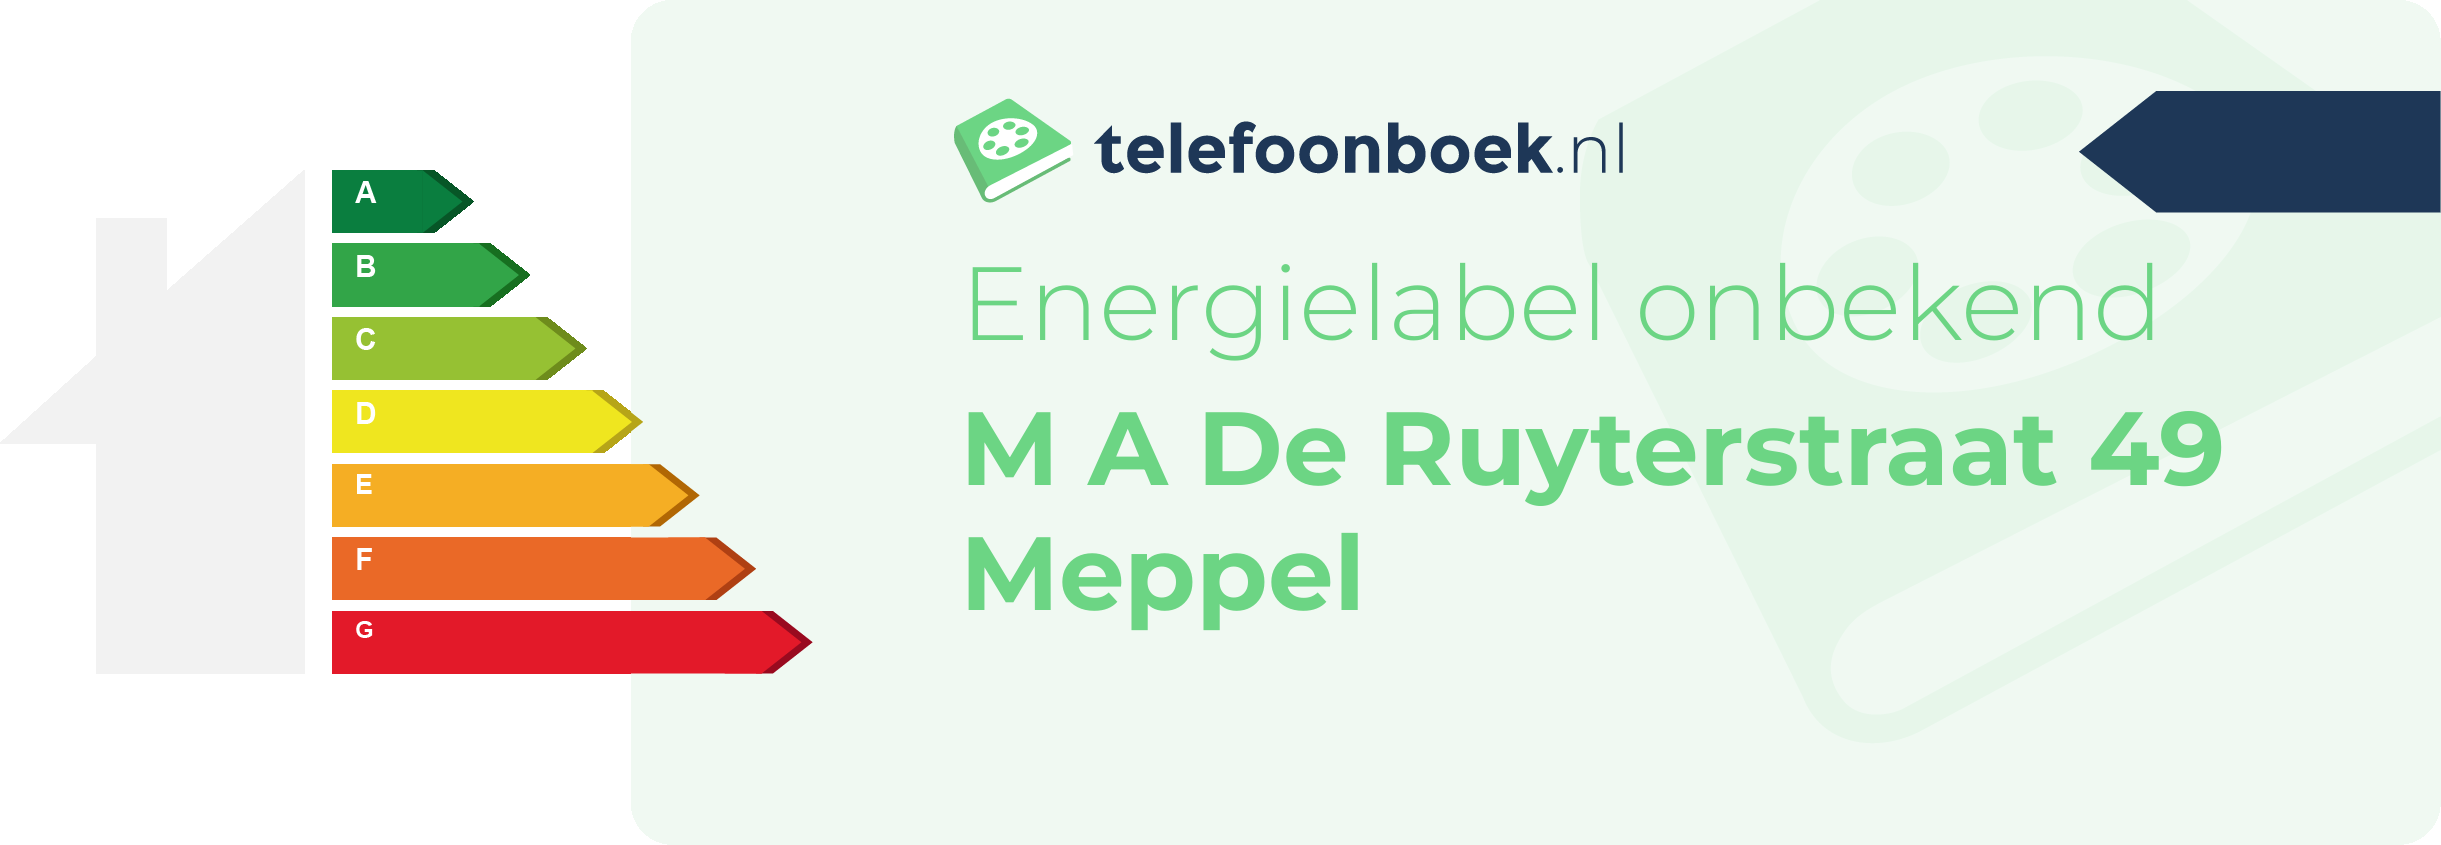 Energielabel M A De Ruyterstraat 49 Meppel